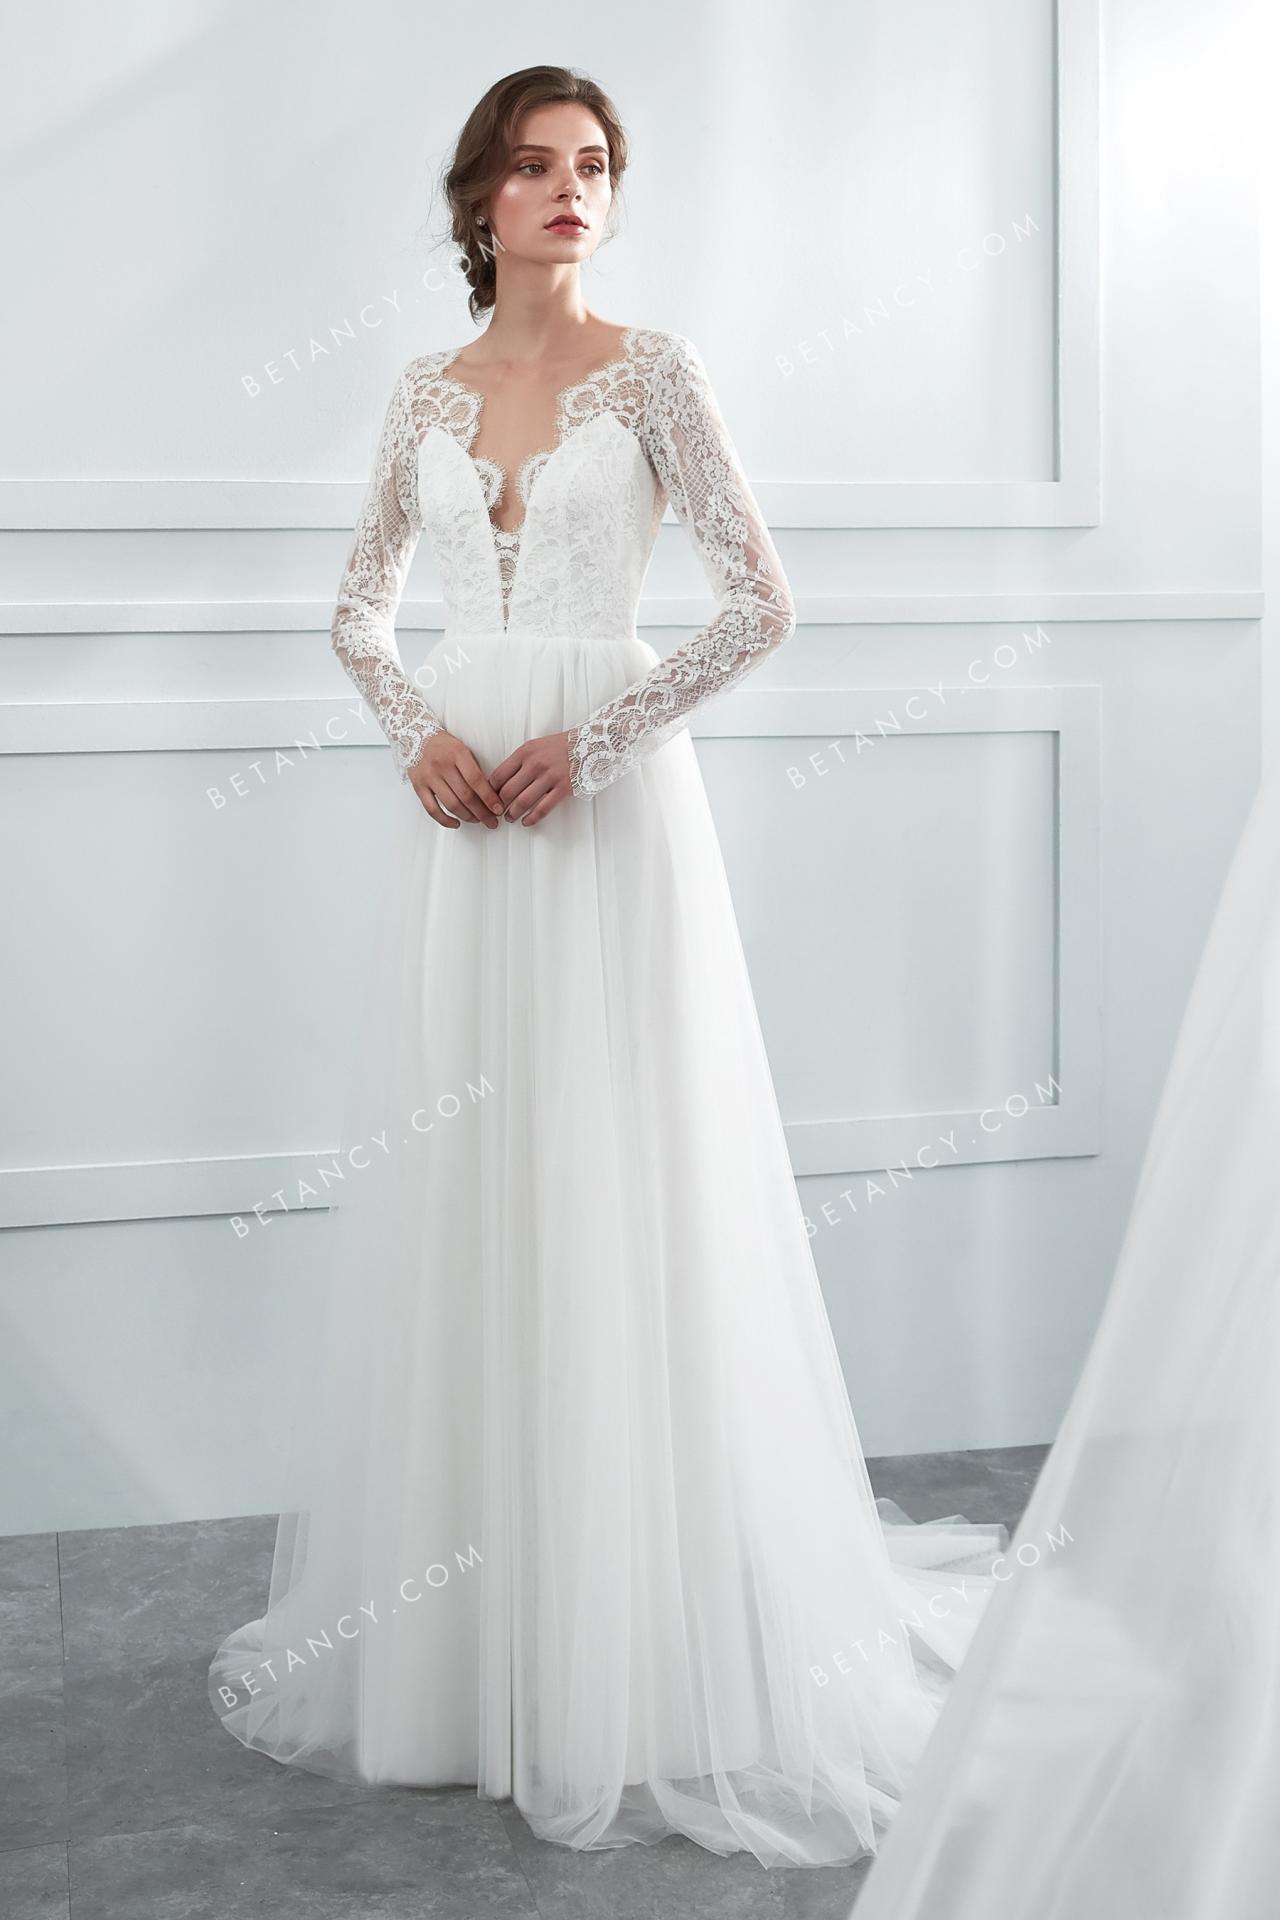 Handmade light ivory long sleeve a line wholesale wedding dress 2